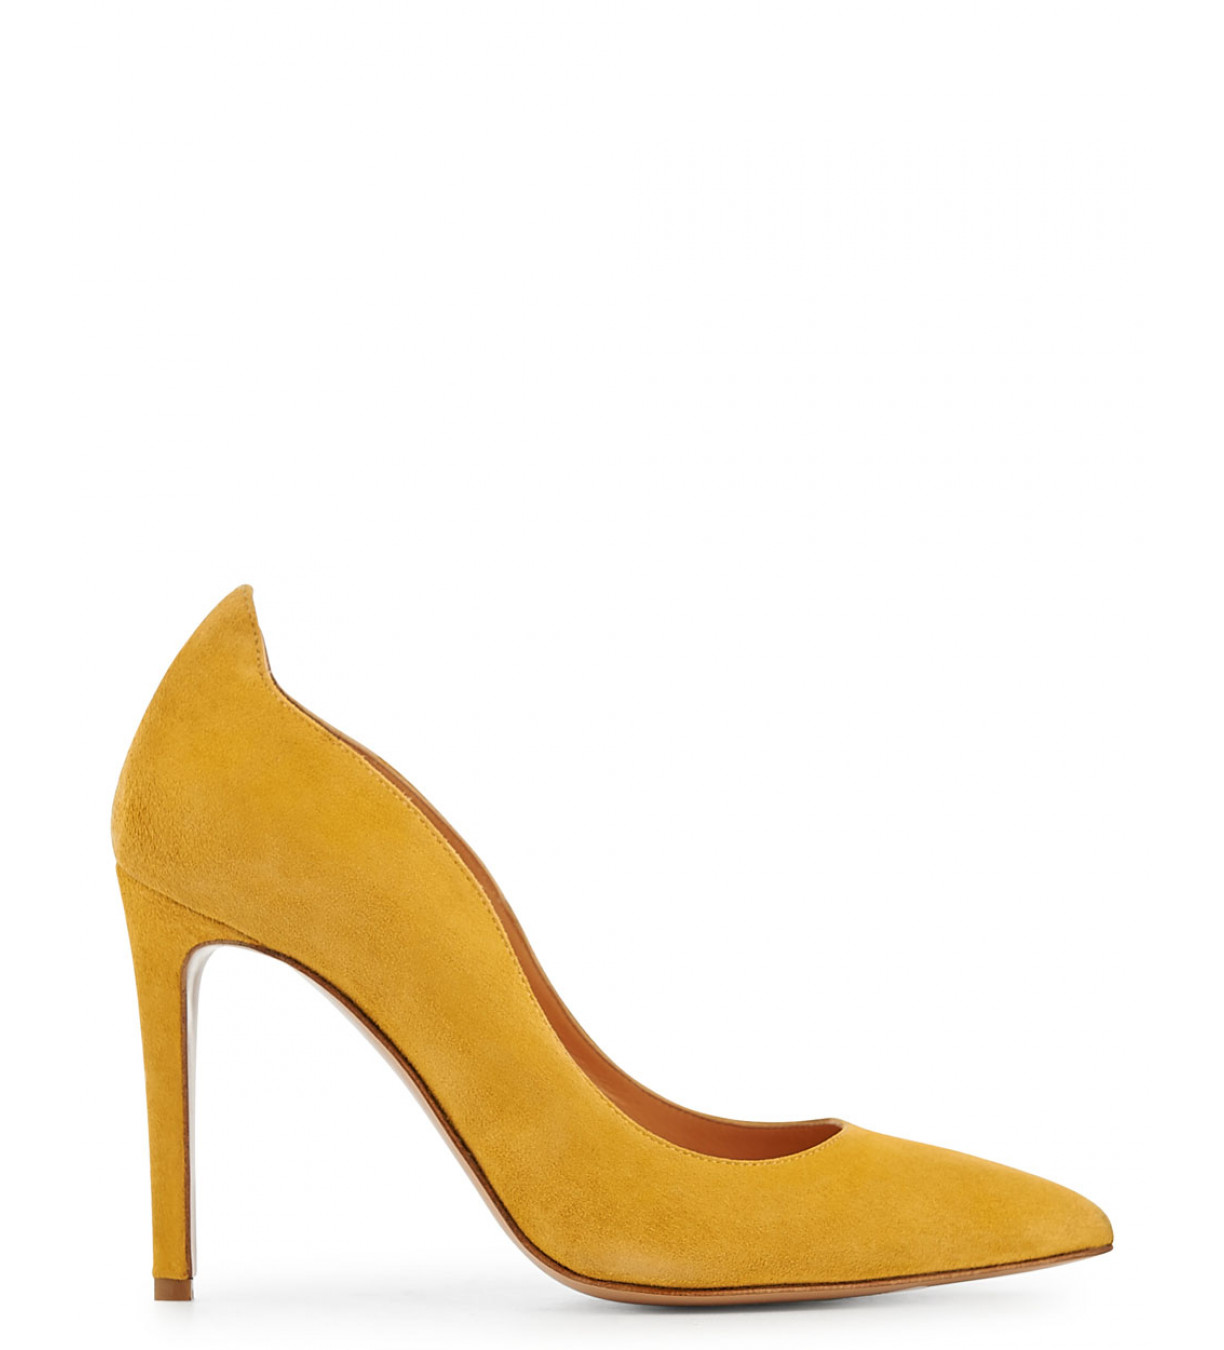 12. escarpins-hauts-jaune-chevre-velours-chaussures-mariee